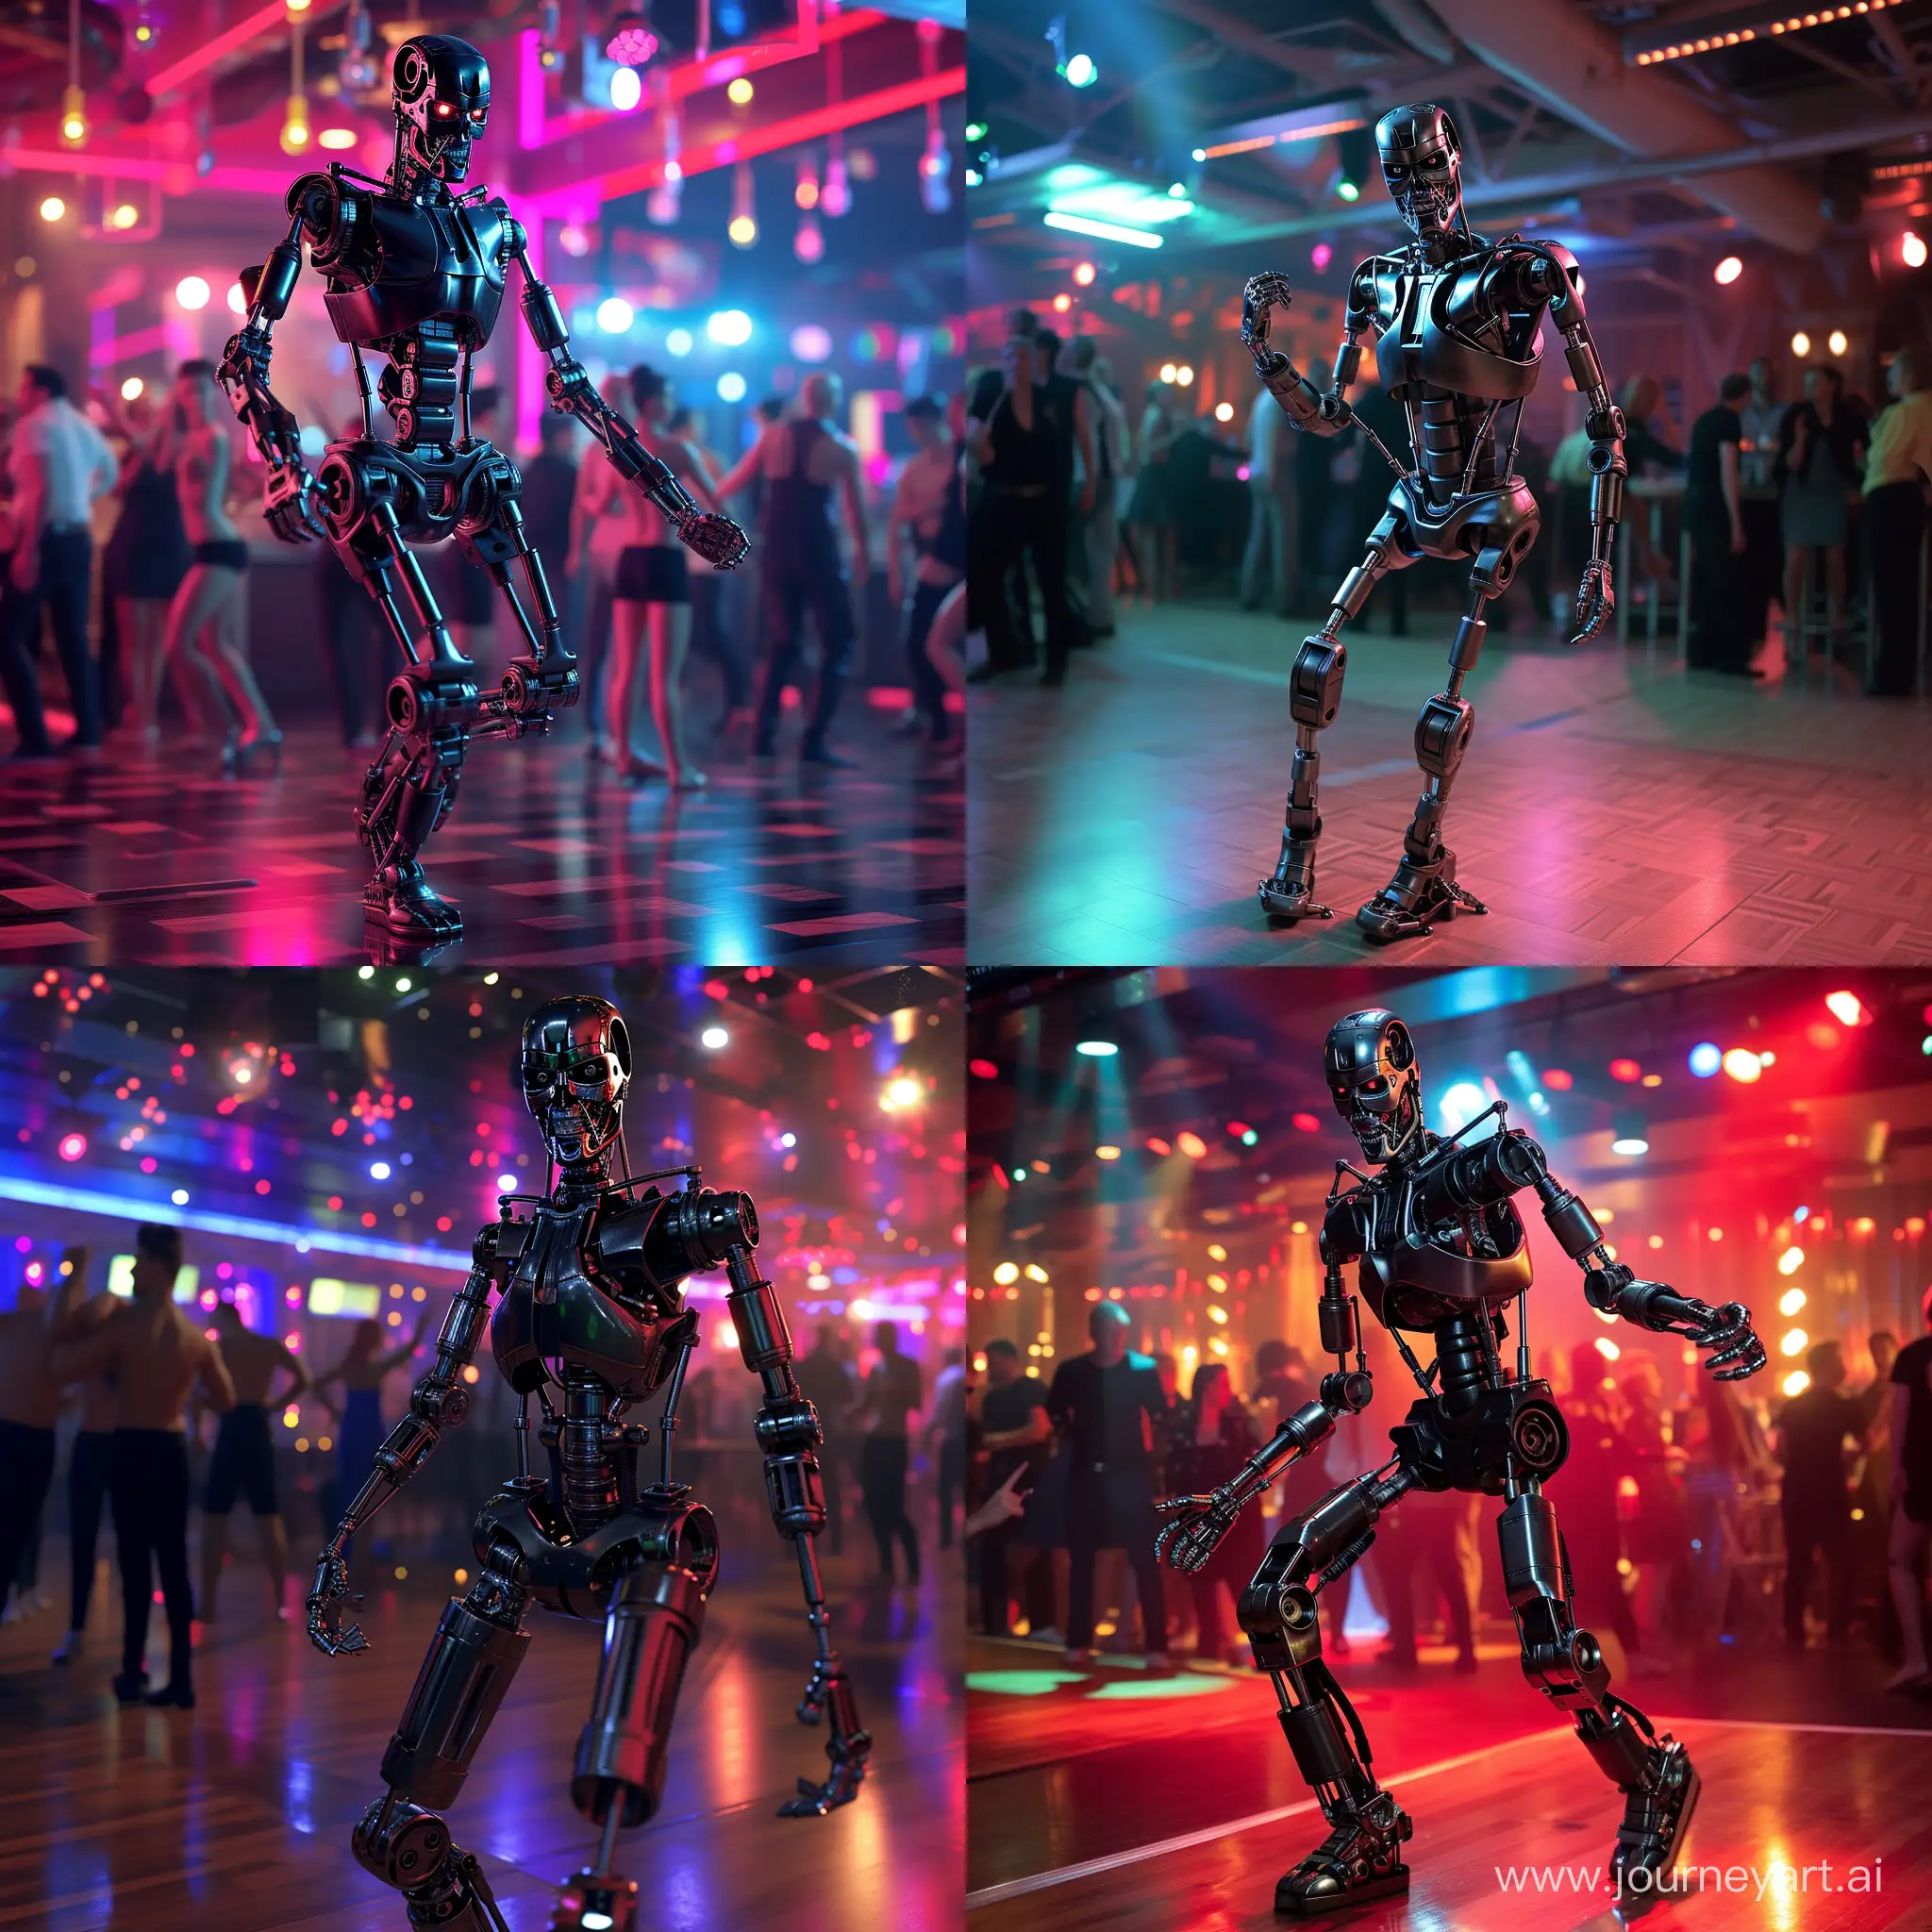 Terminator-T600-Dancing-in-Nightclub